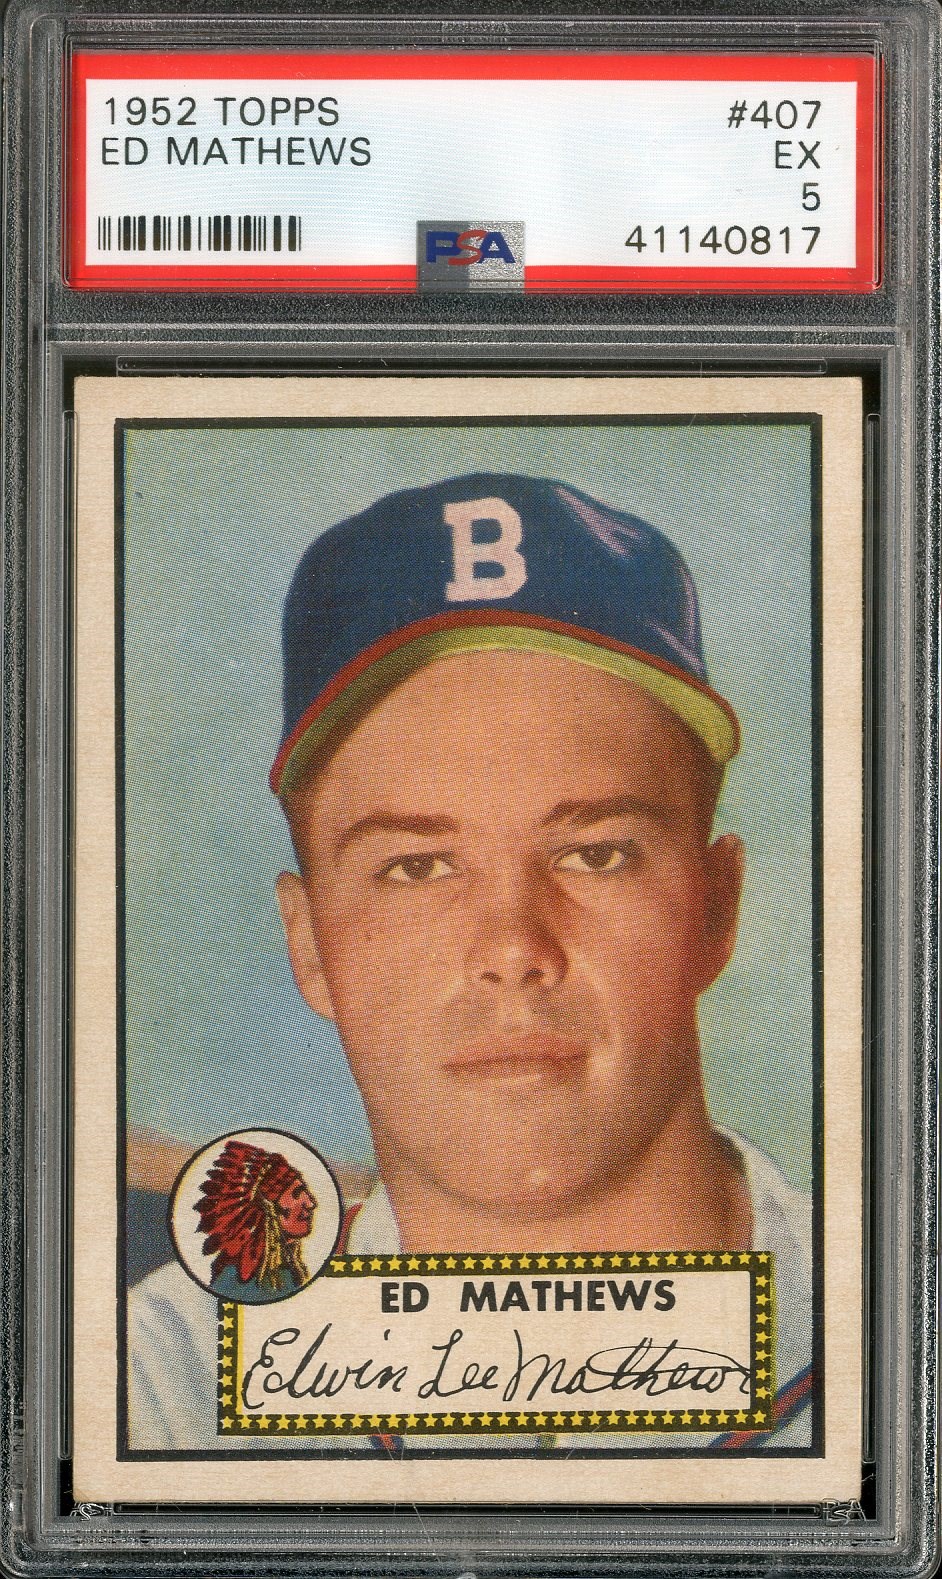 Baseball and Trading Cards - 1952 Topps Eddie Mathews #407 Rookie (PSA EX 5)